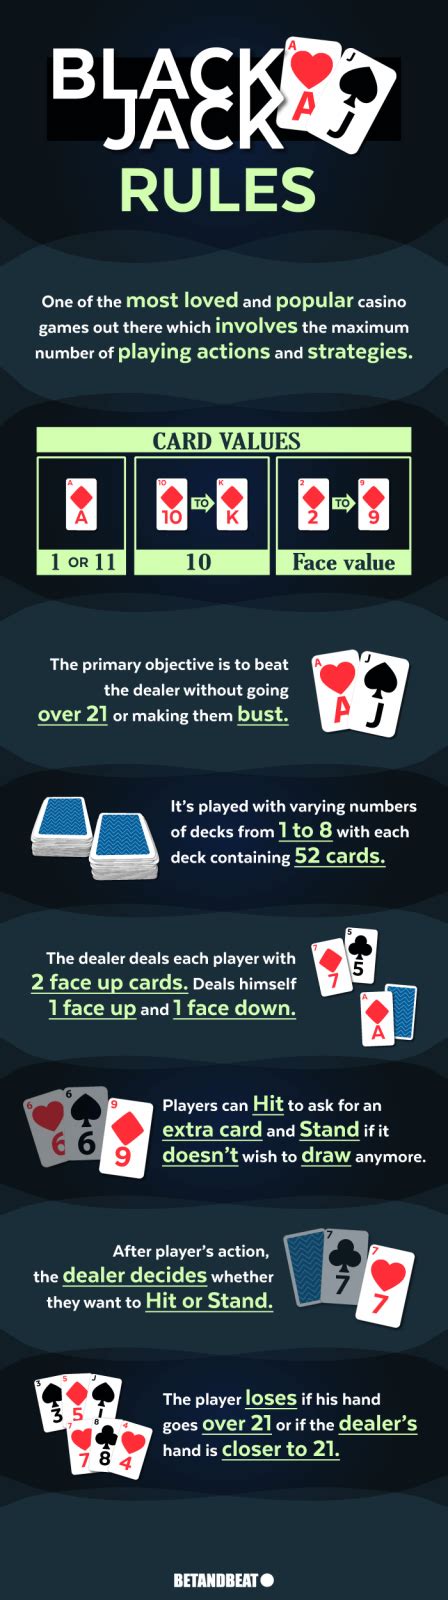 blackjack card games rules rikj canada